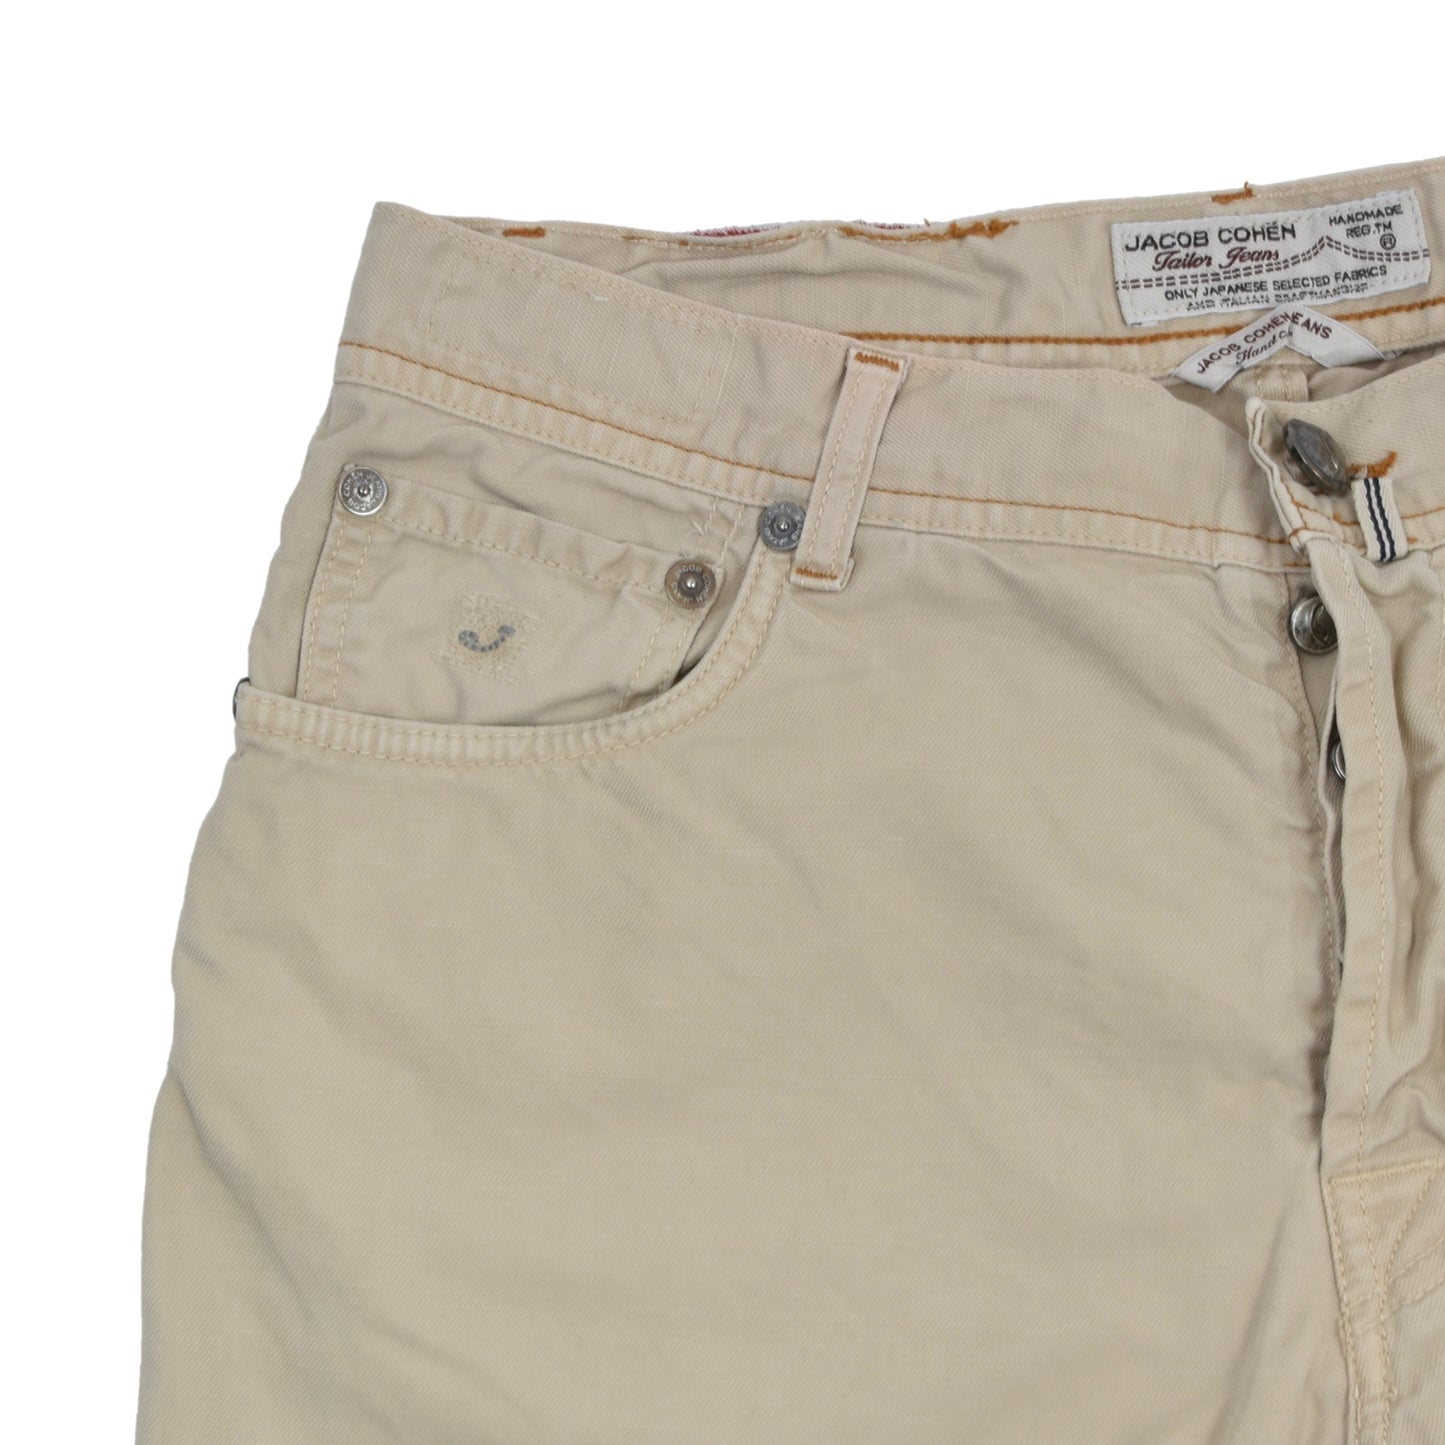 Jacob Cohën Jeans Cotton-Hemp Shorts Size 35 - Beige